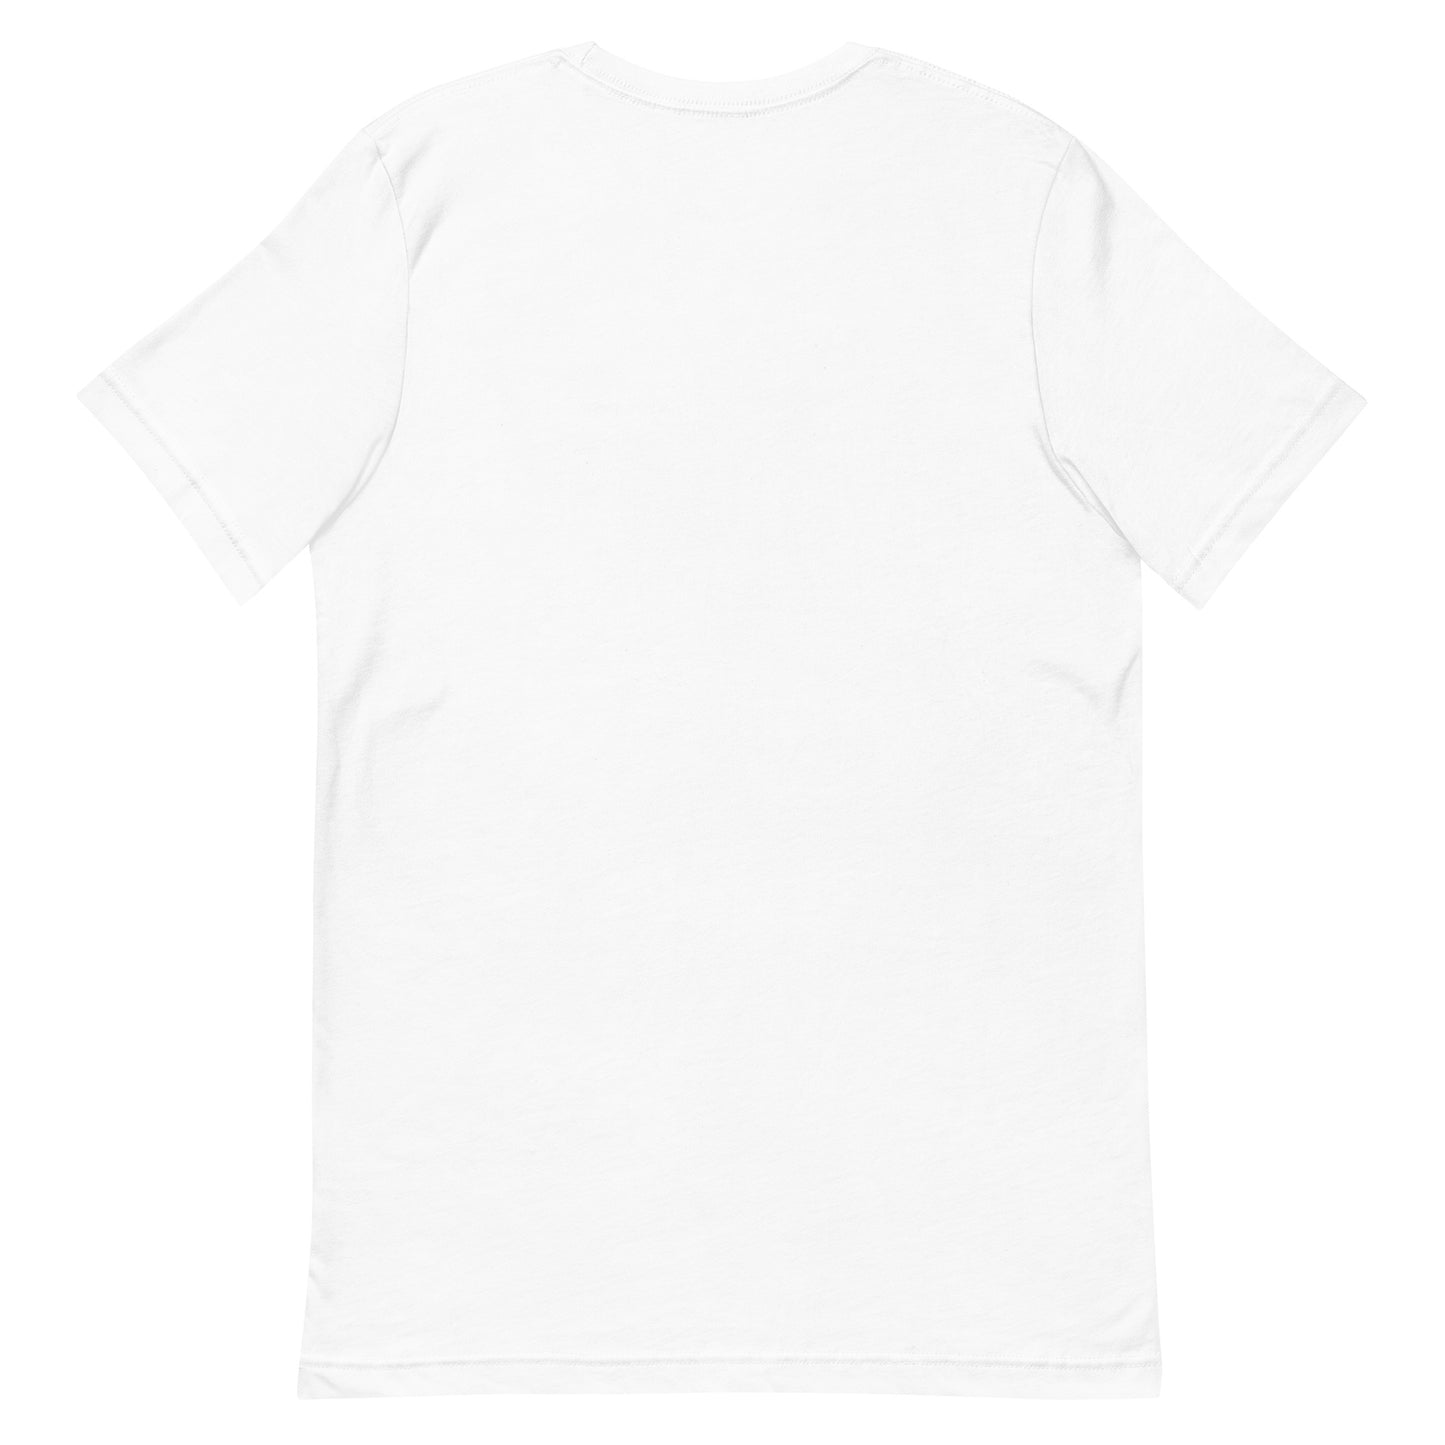 Unisex t-shirt "45 KIKU NO KENGAI" White